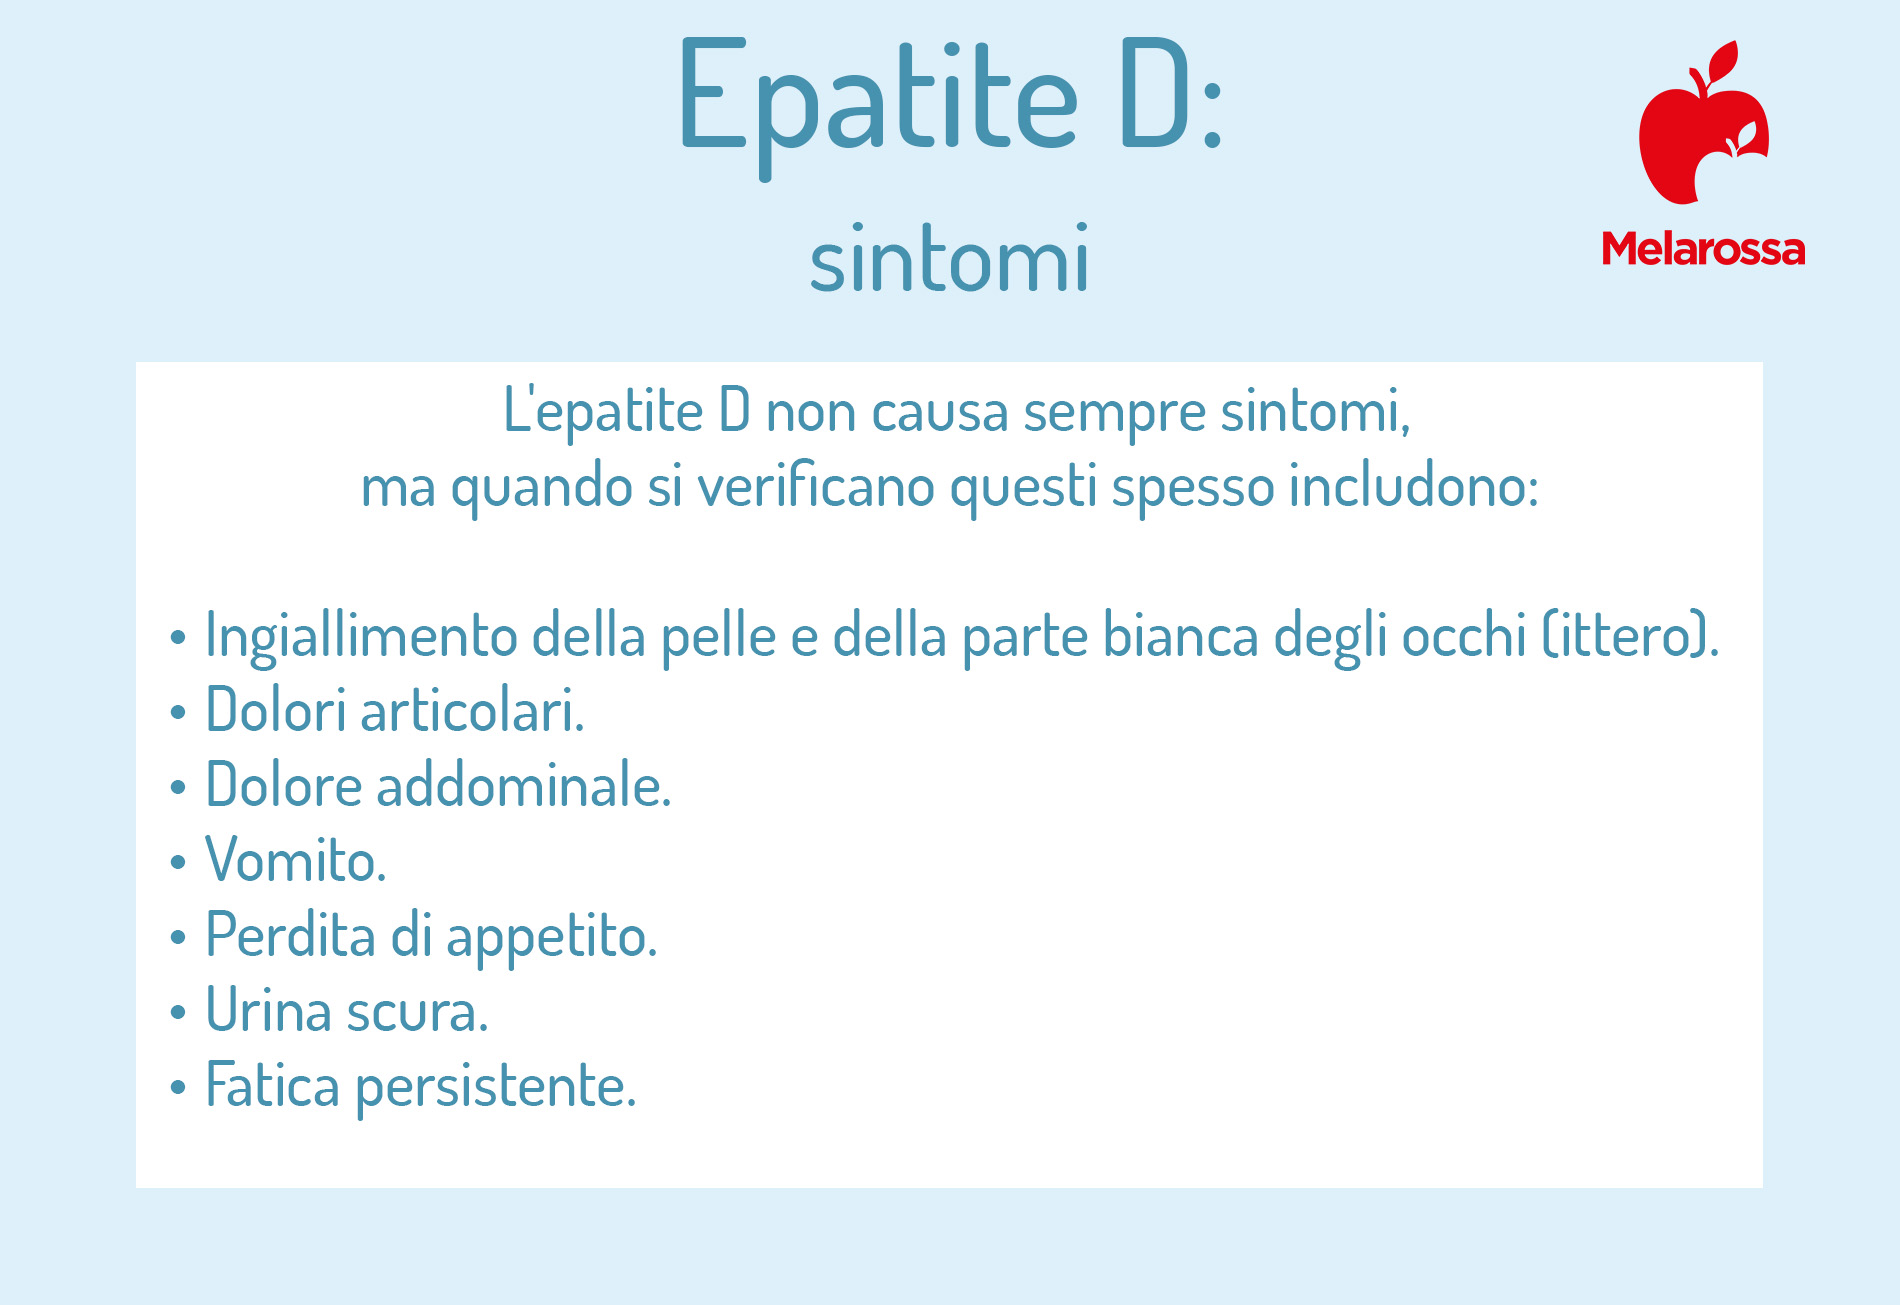 epatite D: sintomi 